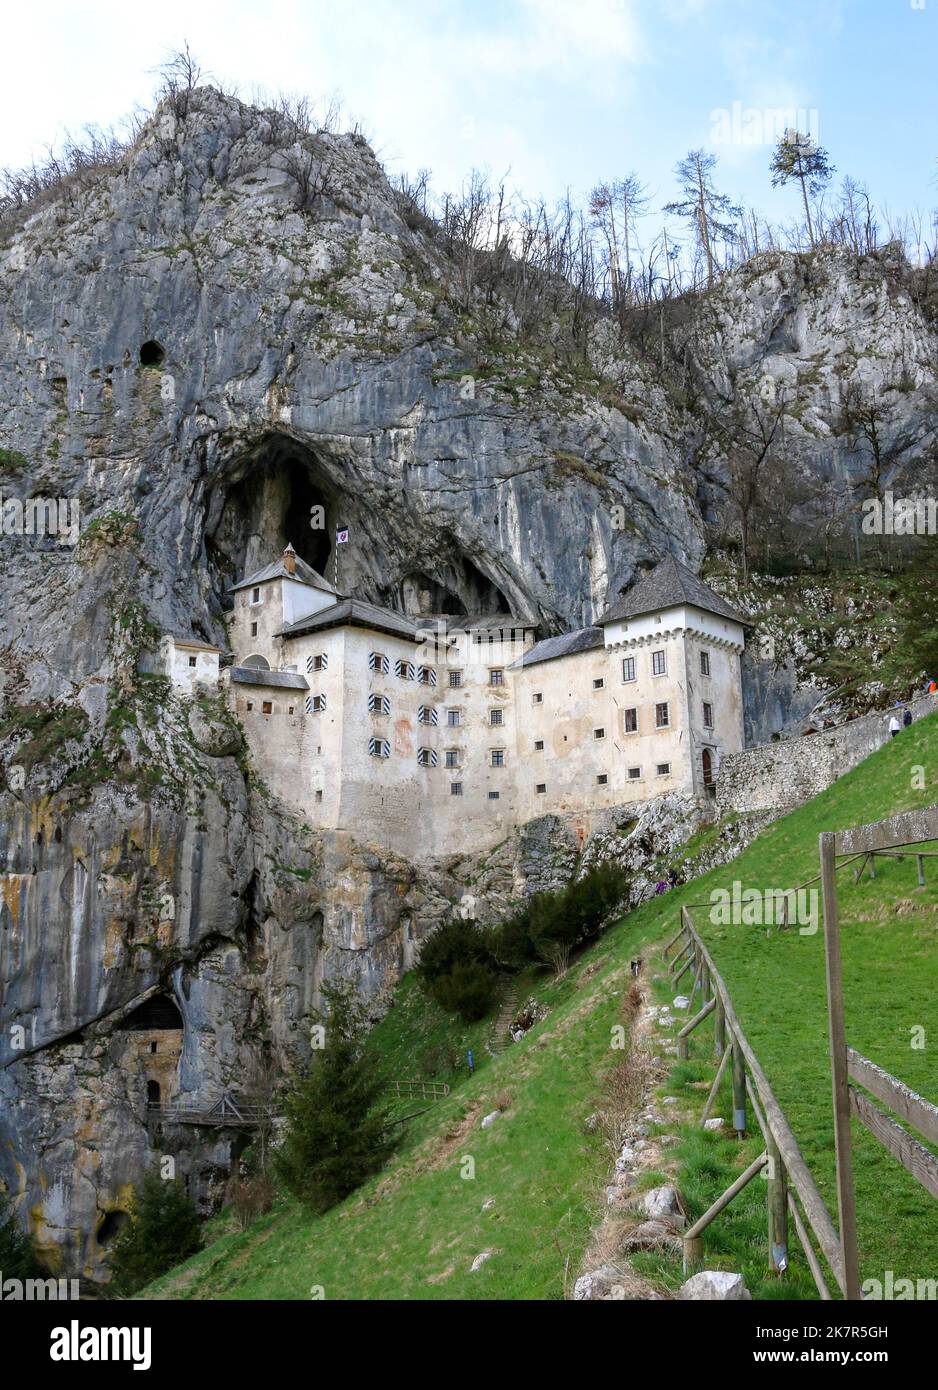 Predjama Castle, a Renaissance castle built within a cave mouth in Slovenia Stock Photo